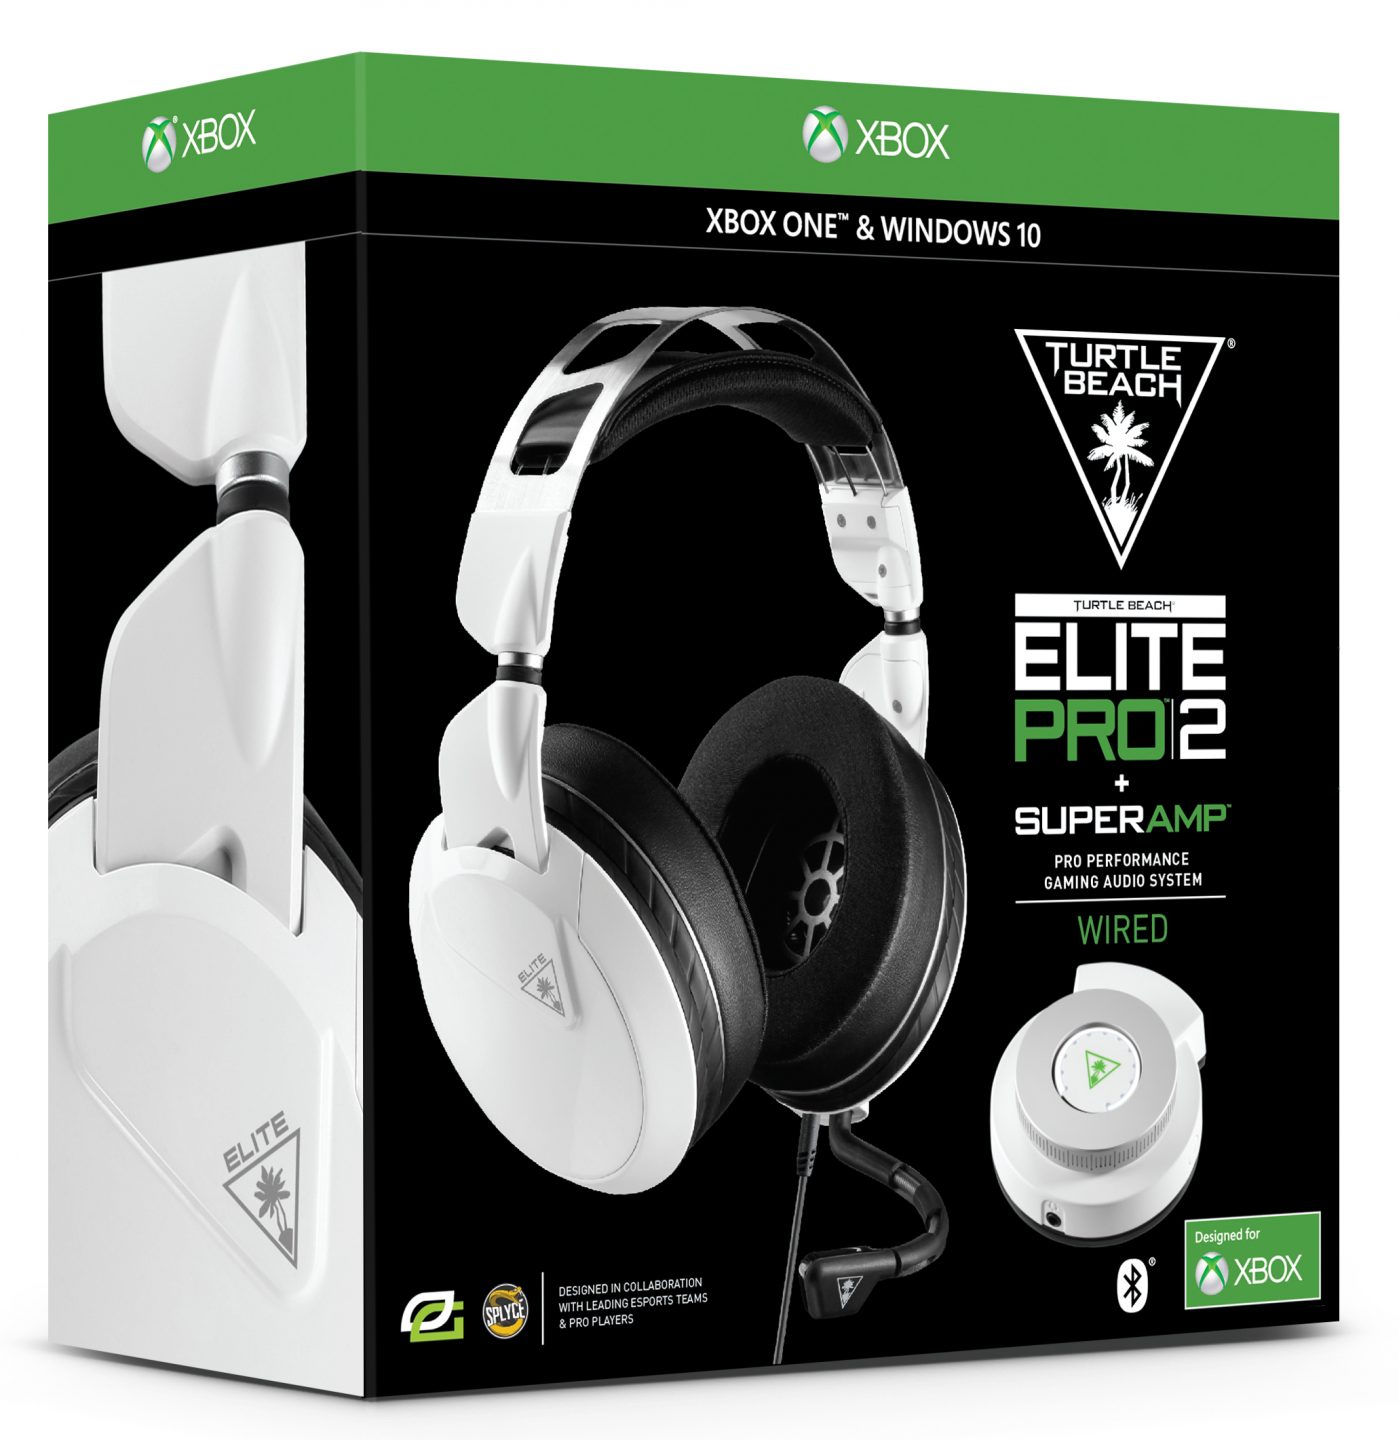 Elite Pro 2 + Superamp Pro Performance Gaming Audio System Xbox One (Turtle Beach)